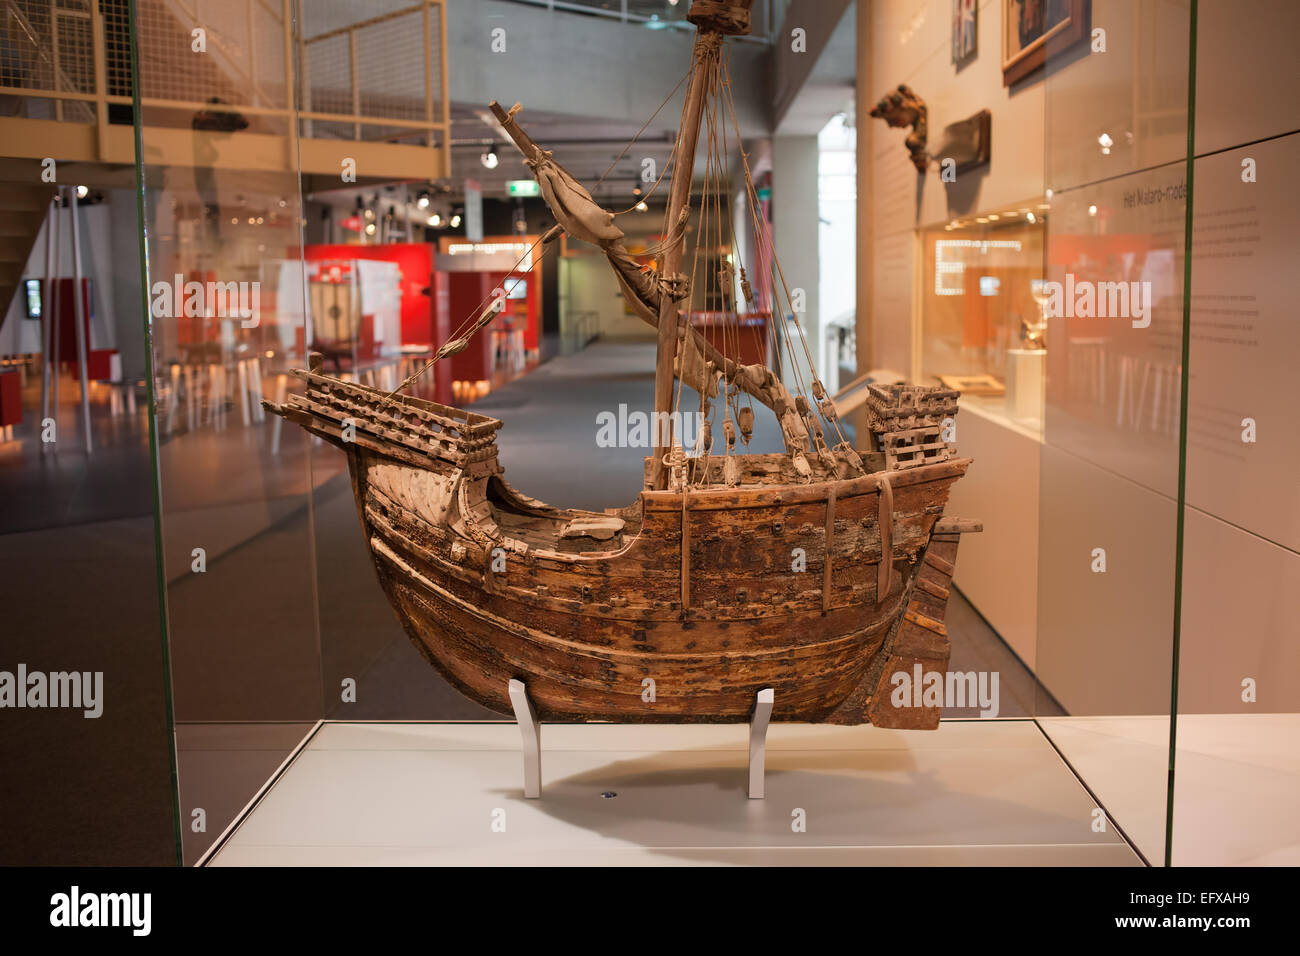 Coca of Mataro medieval merchant ship model from 15th century Rotterdam Maritime Museum, Holland, Netherlands. Stock Photo